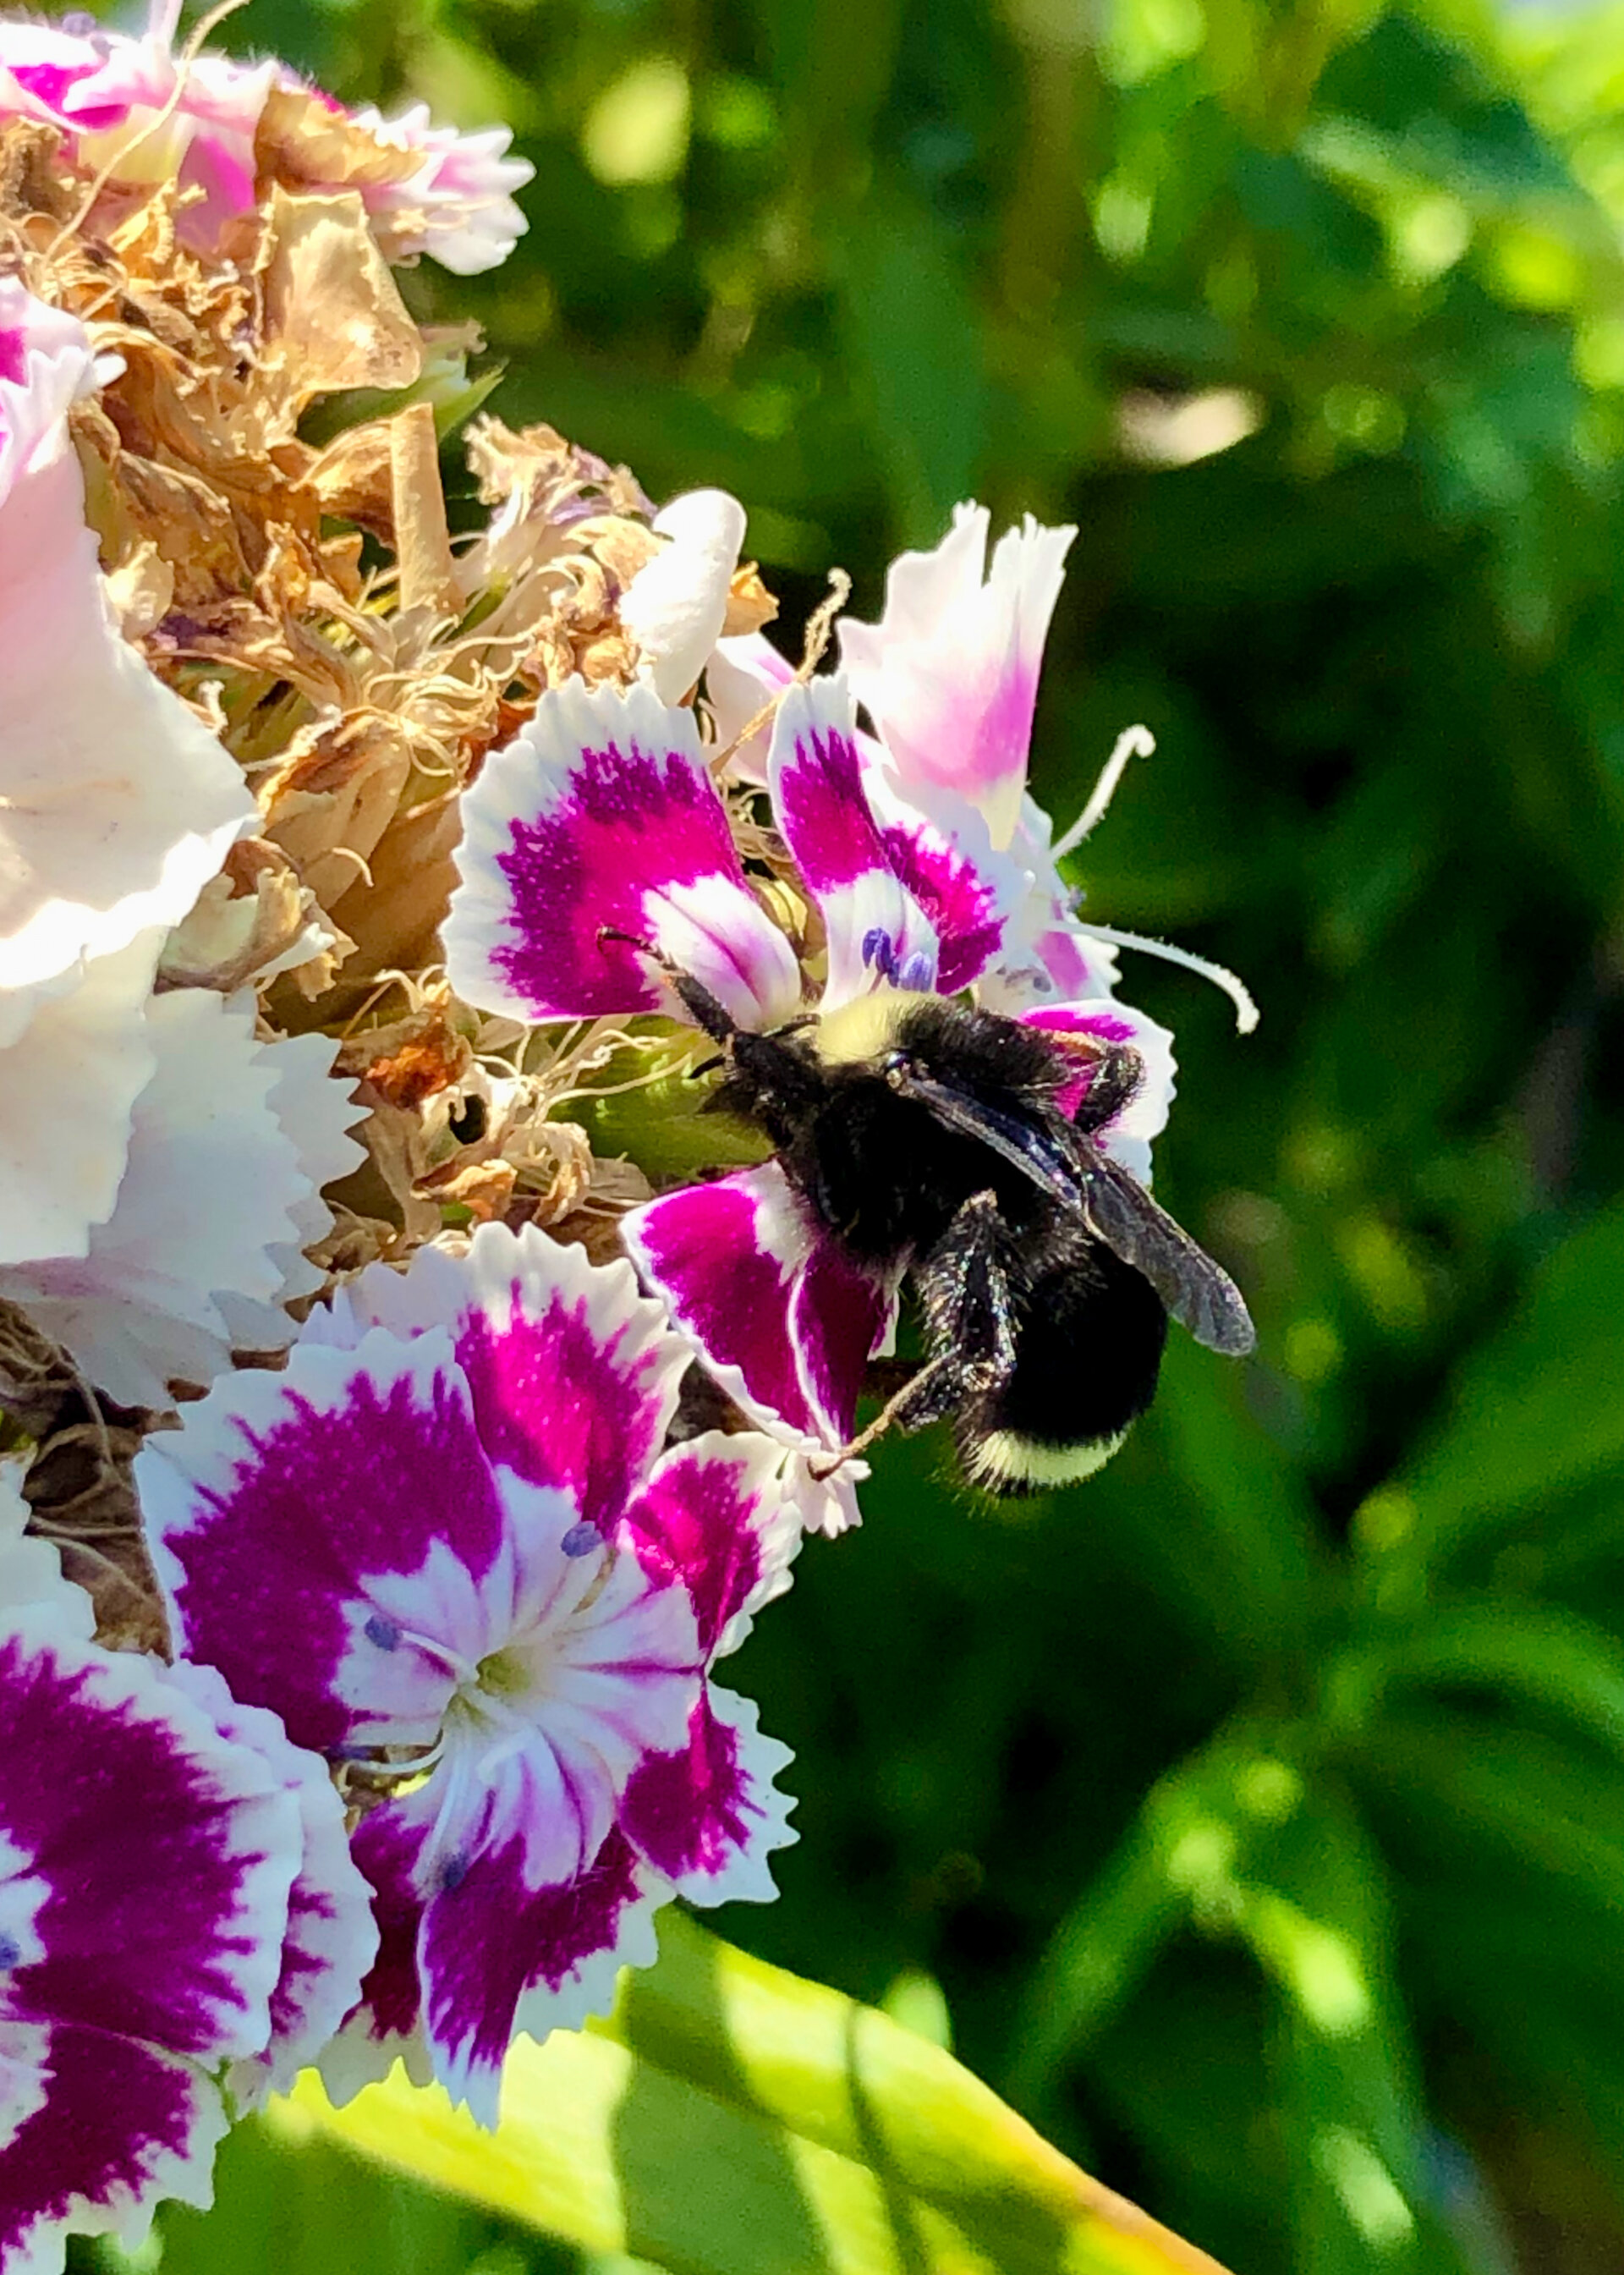  Bumblebee on the wild flowers 